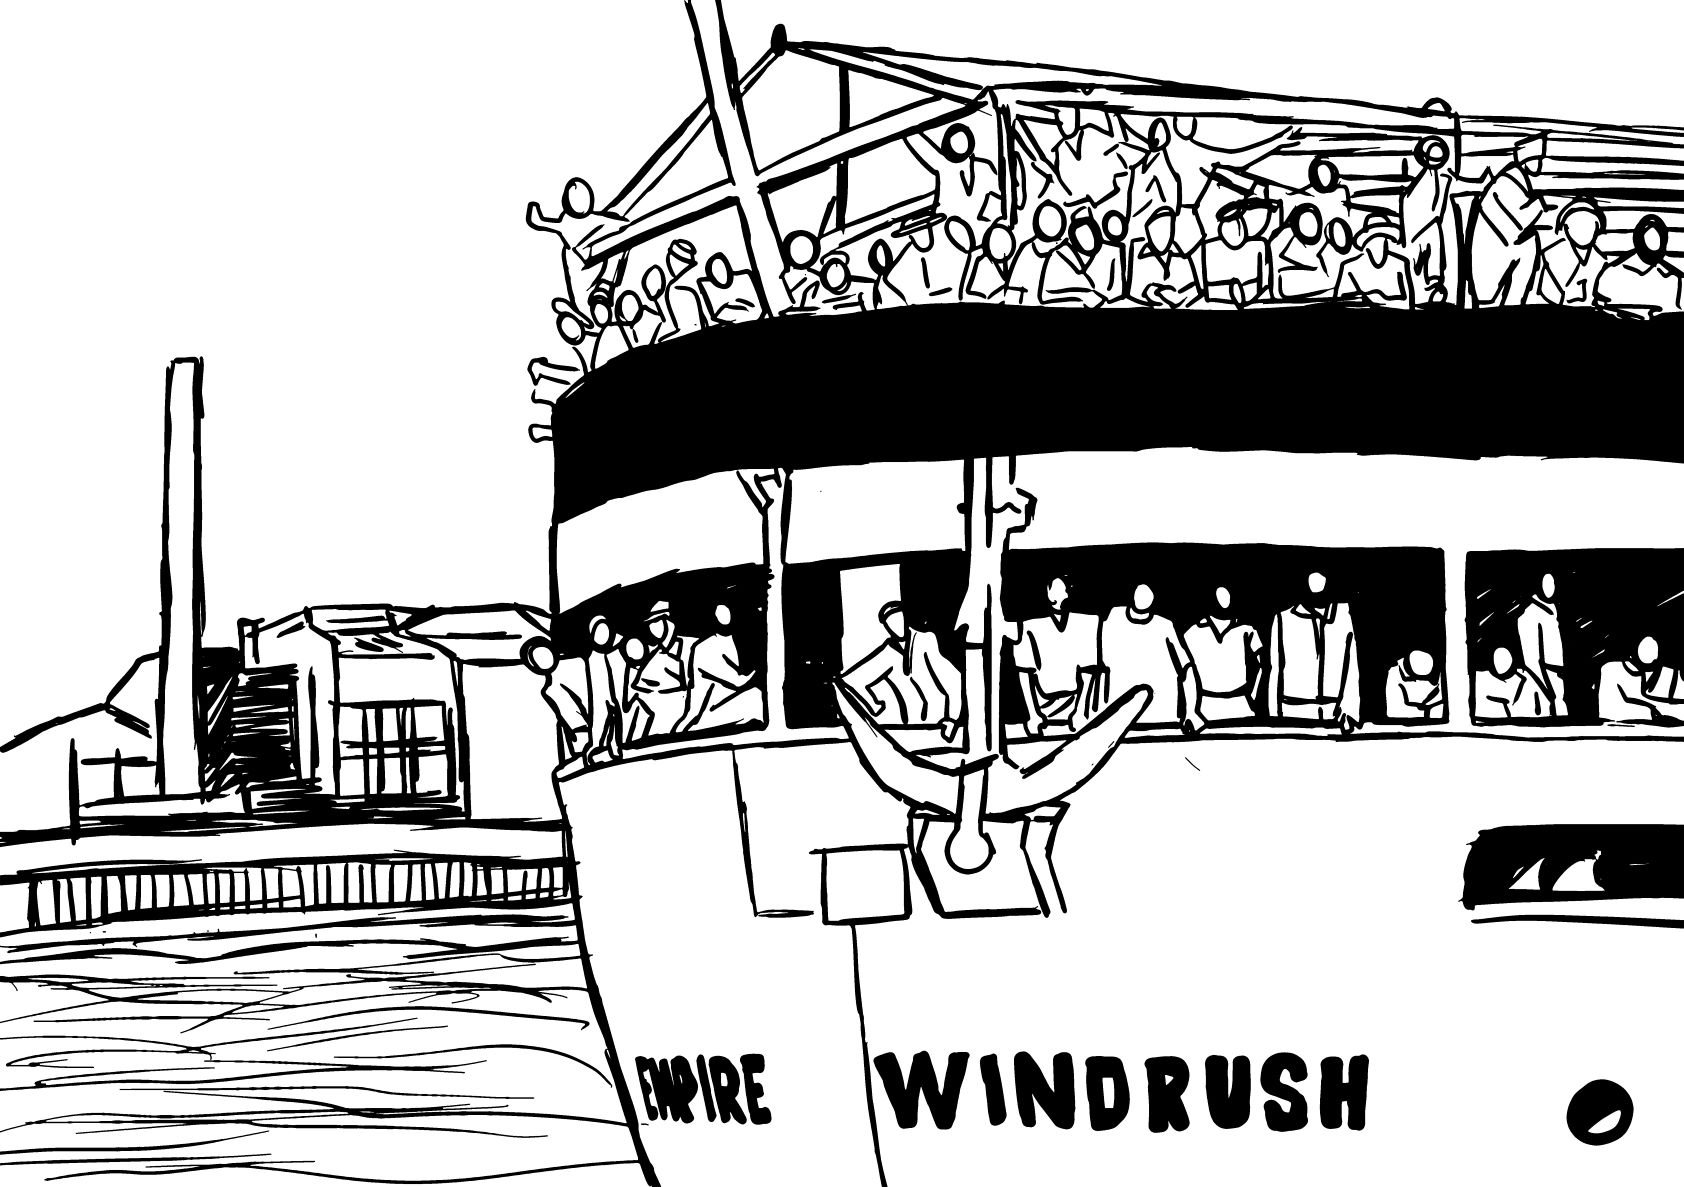 illustration of a full boat saying "empire windrush".jpg